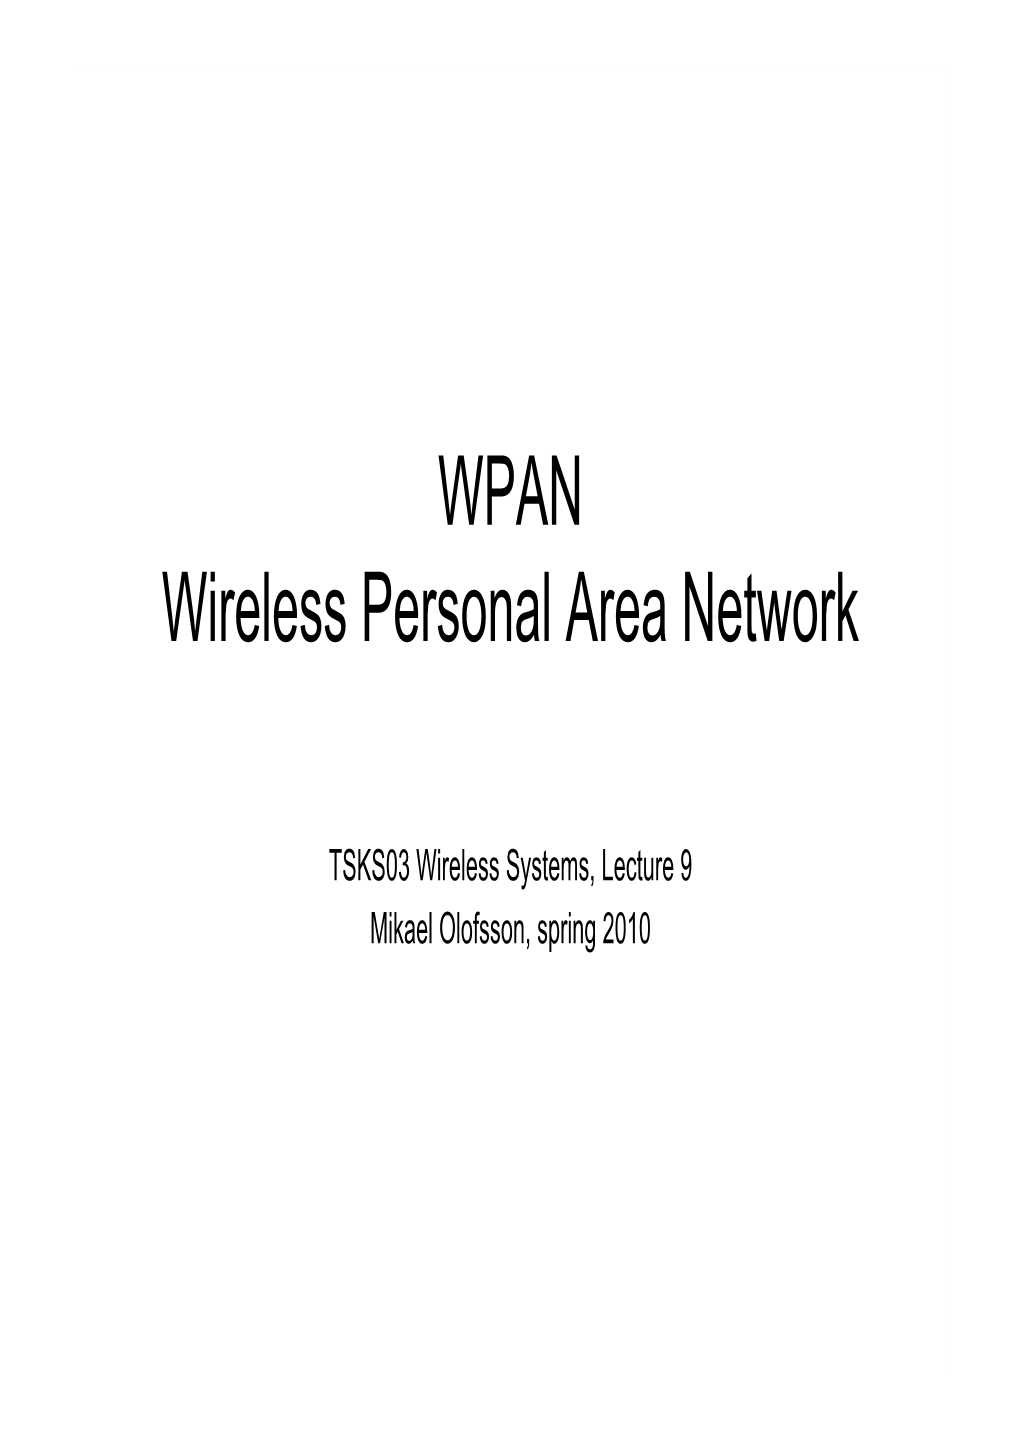 WPAN Wireless Personal Area Network